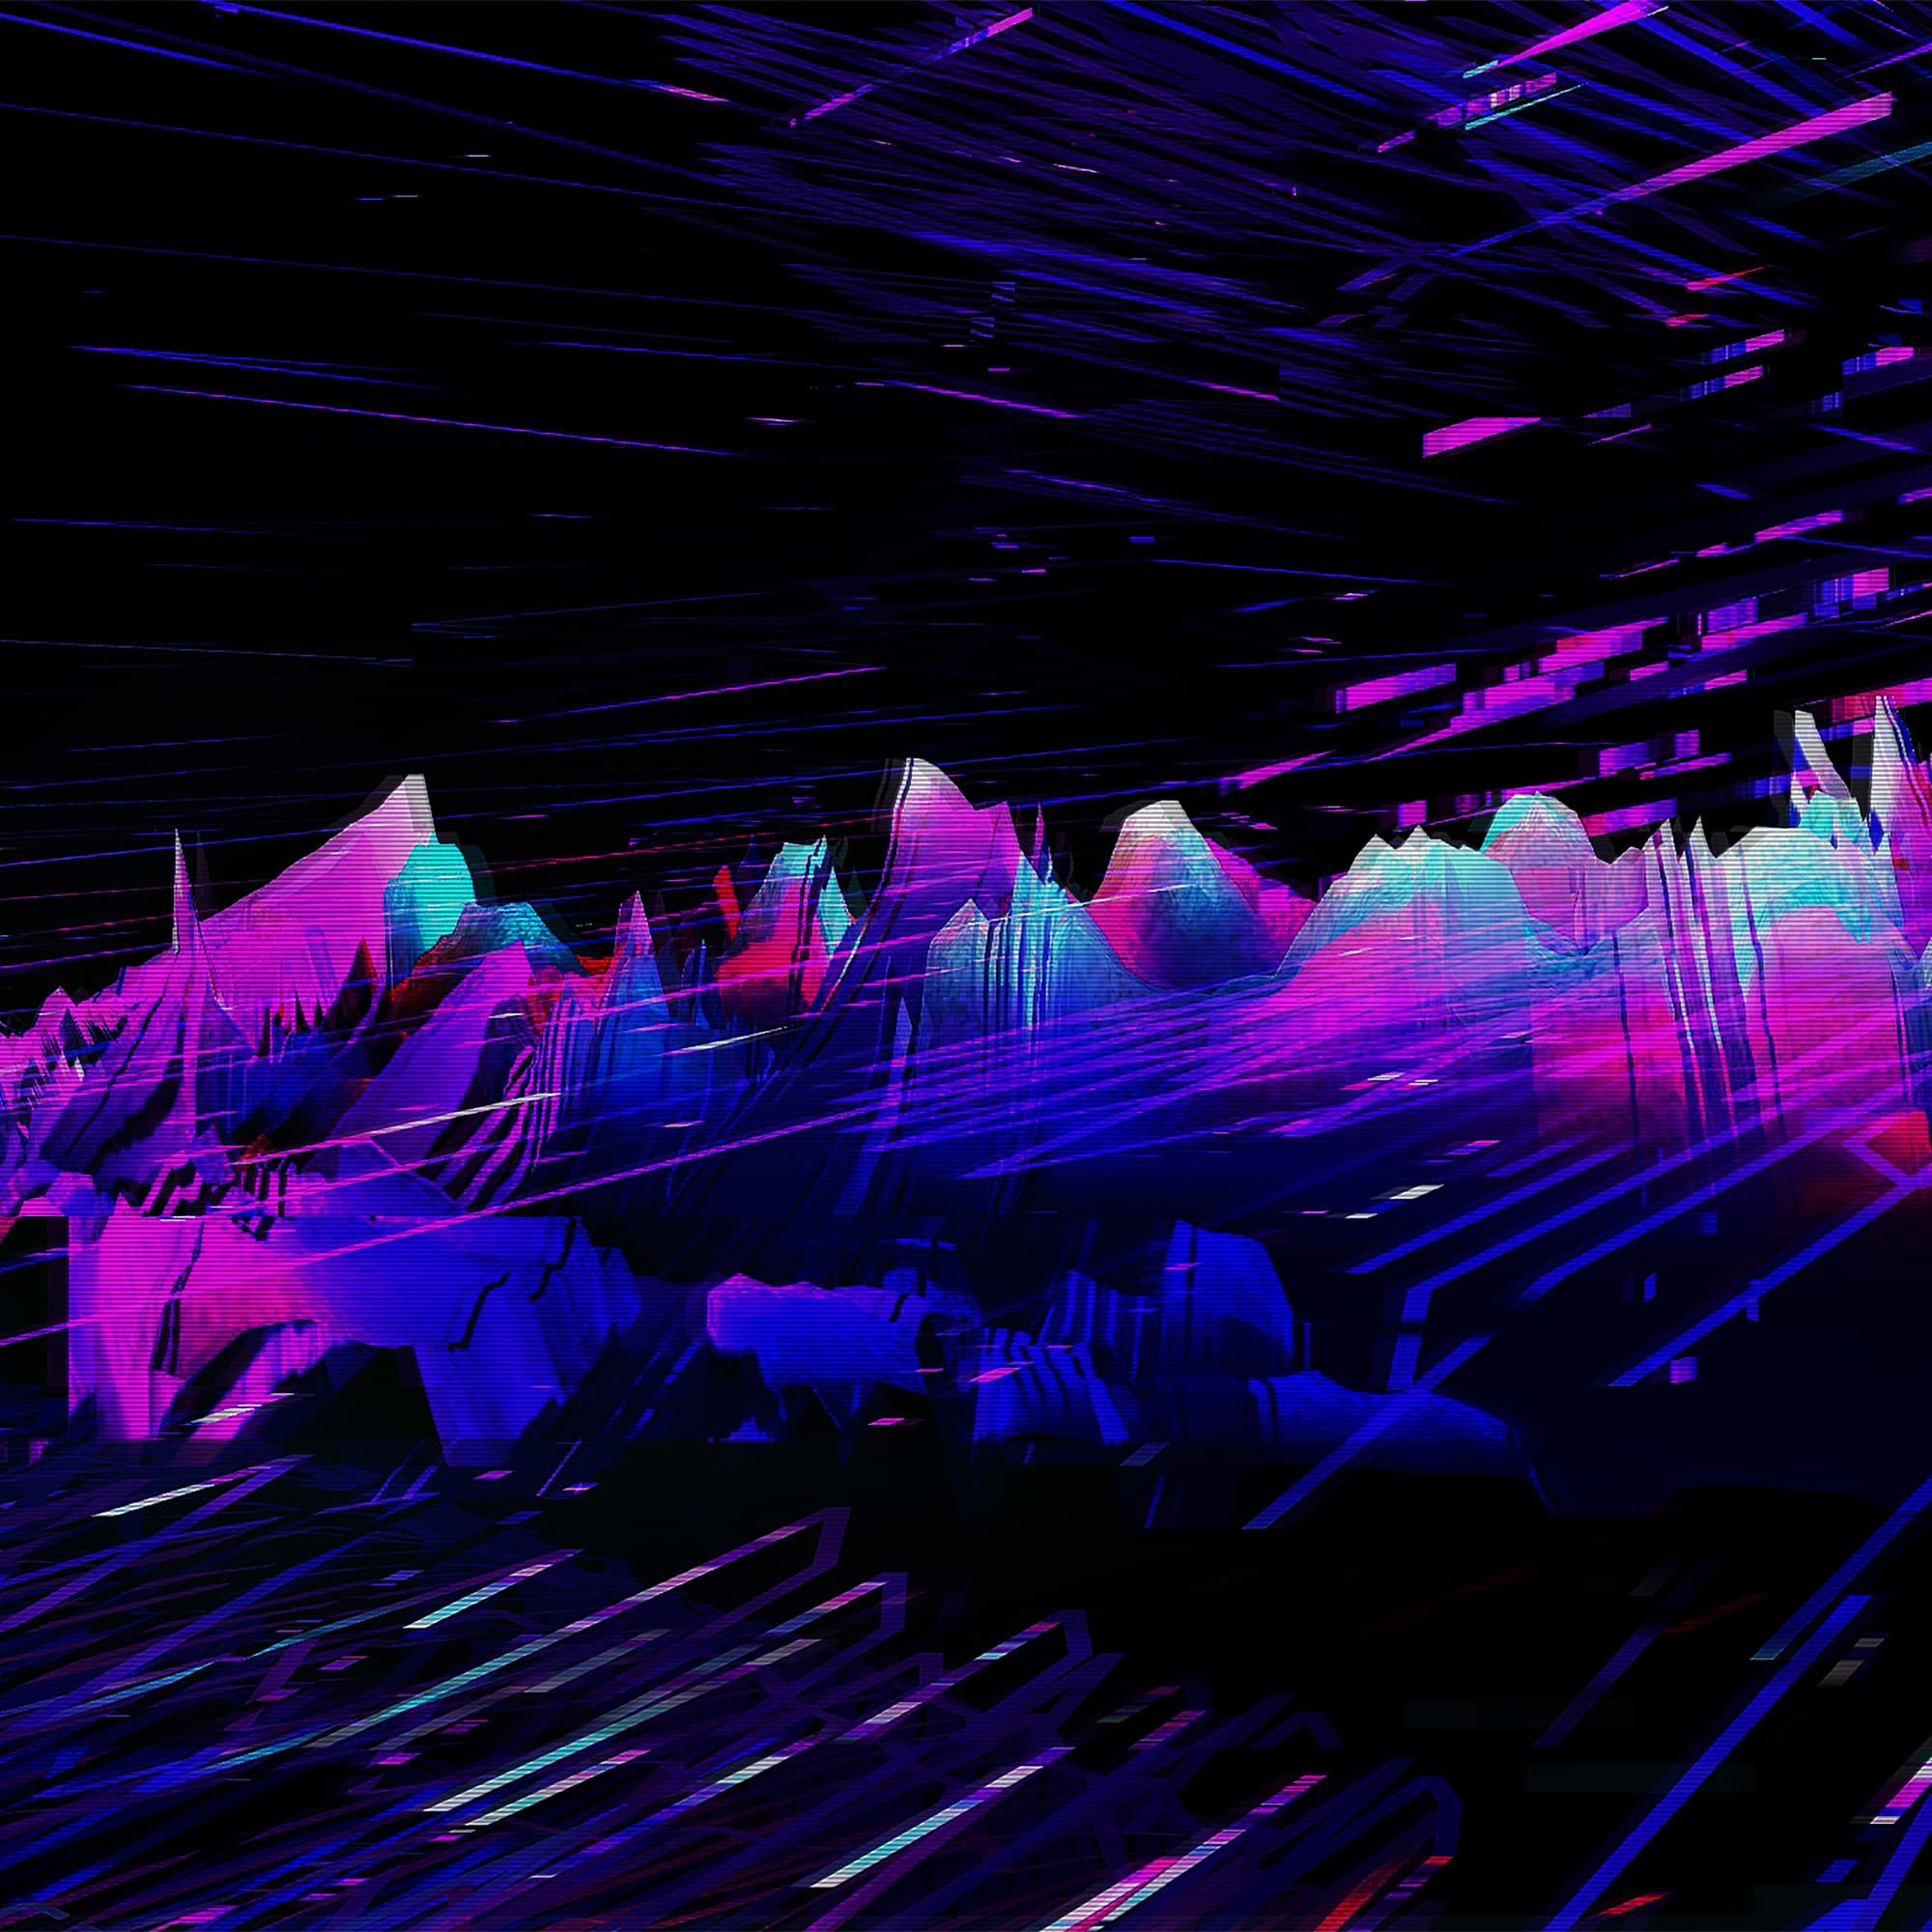 Futuristic, colourful sound waves against a black background.